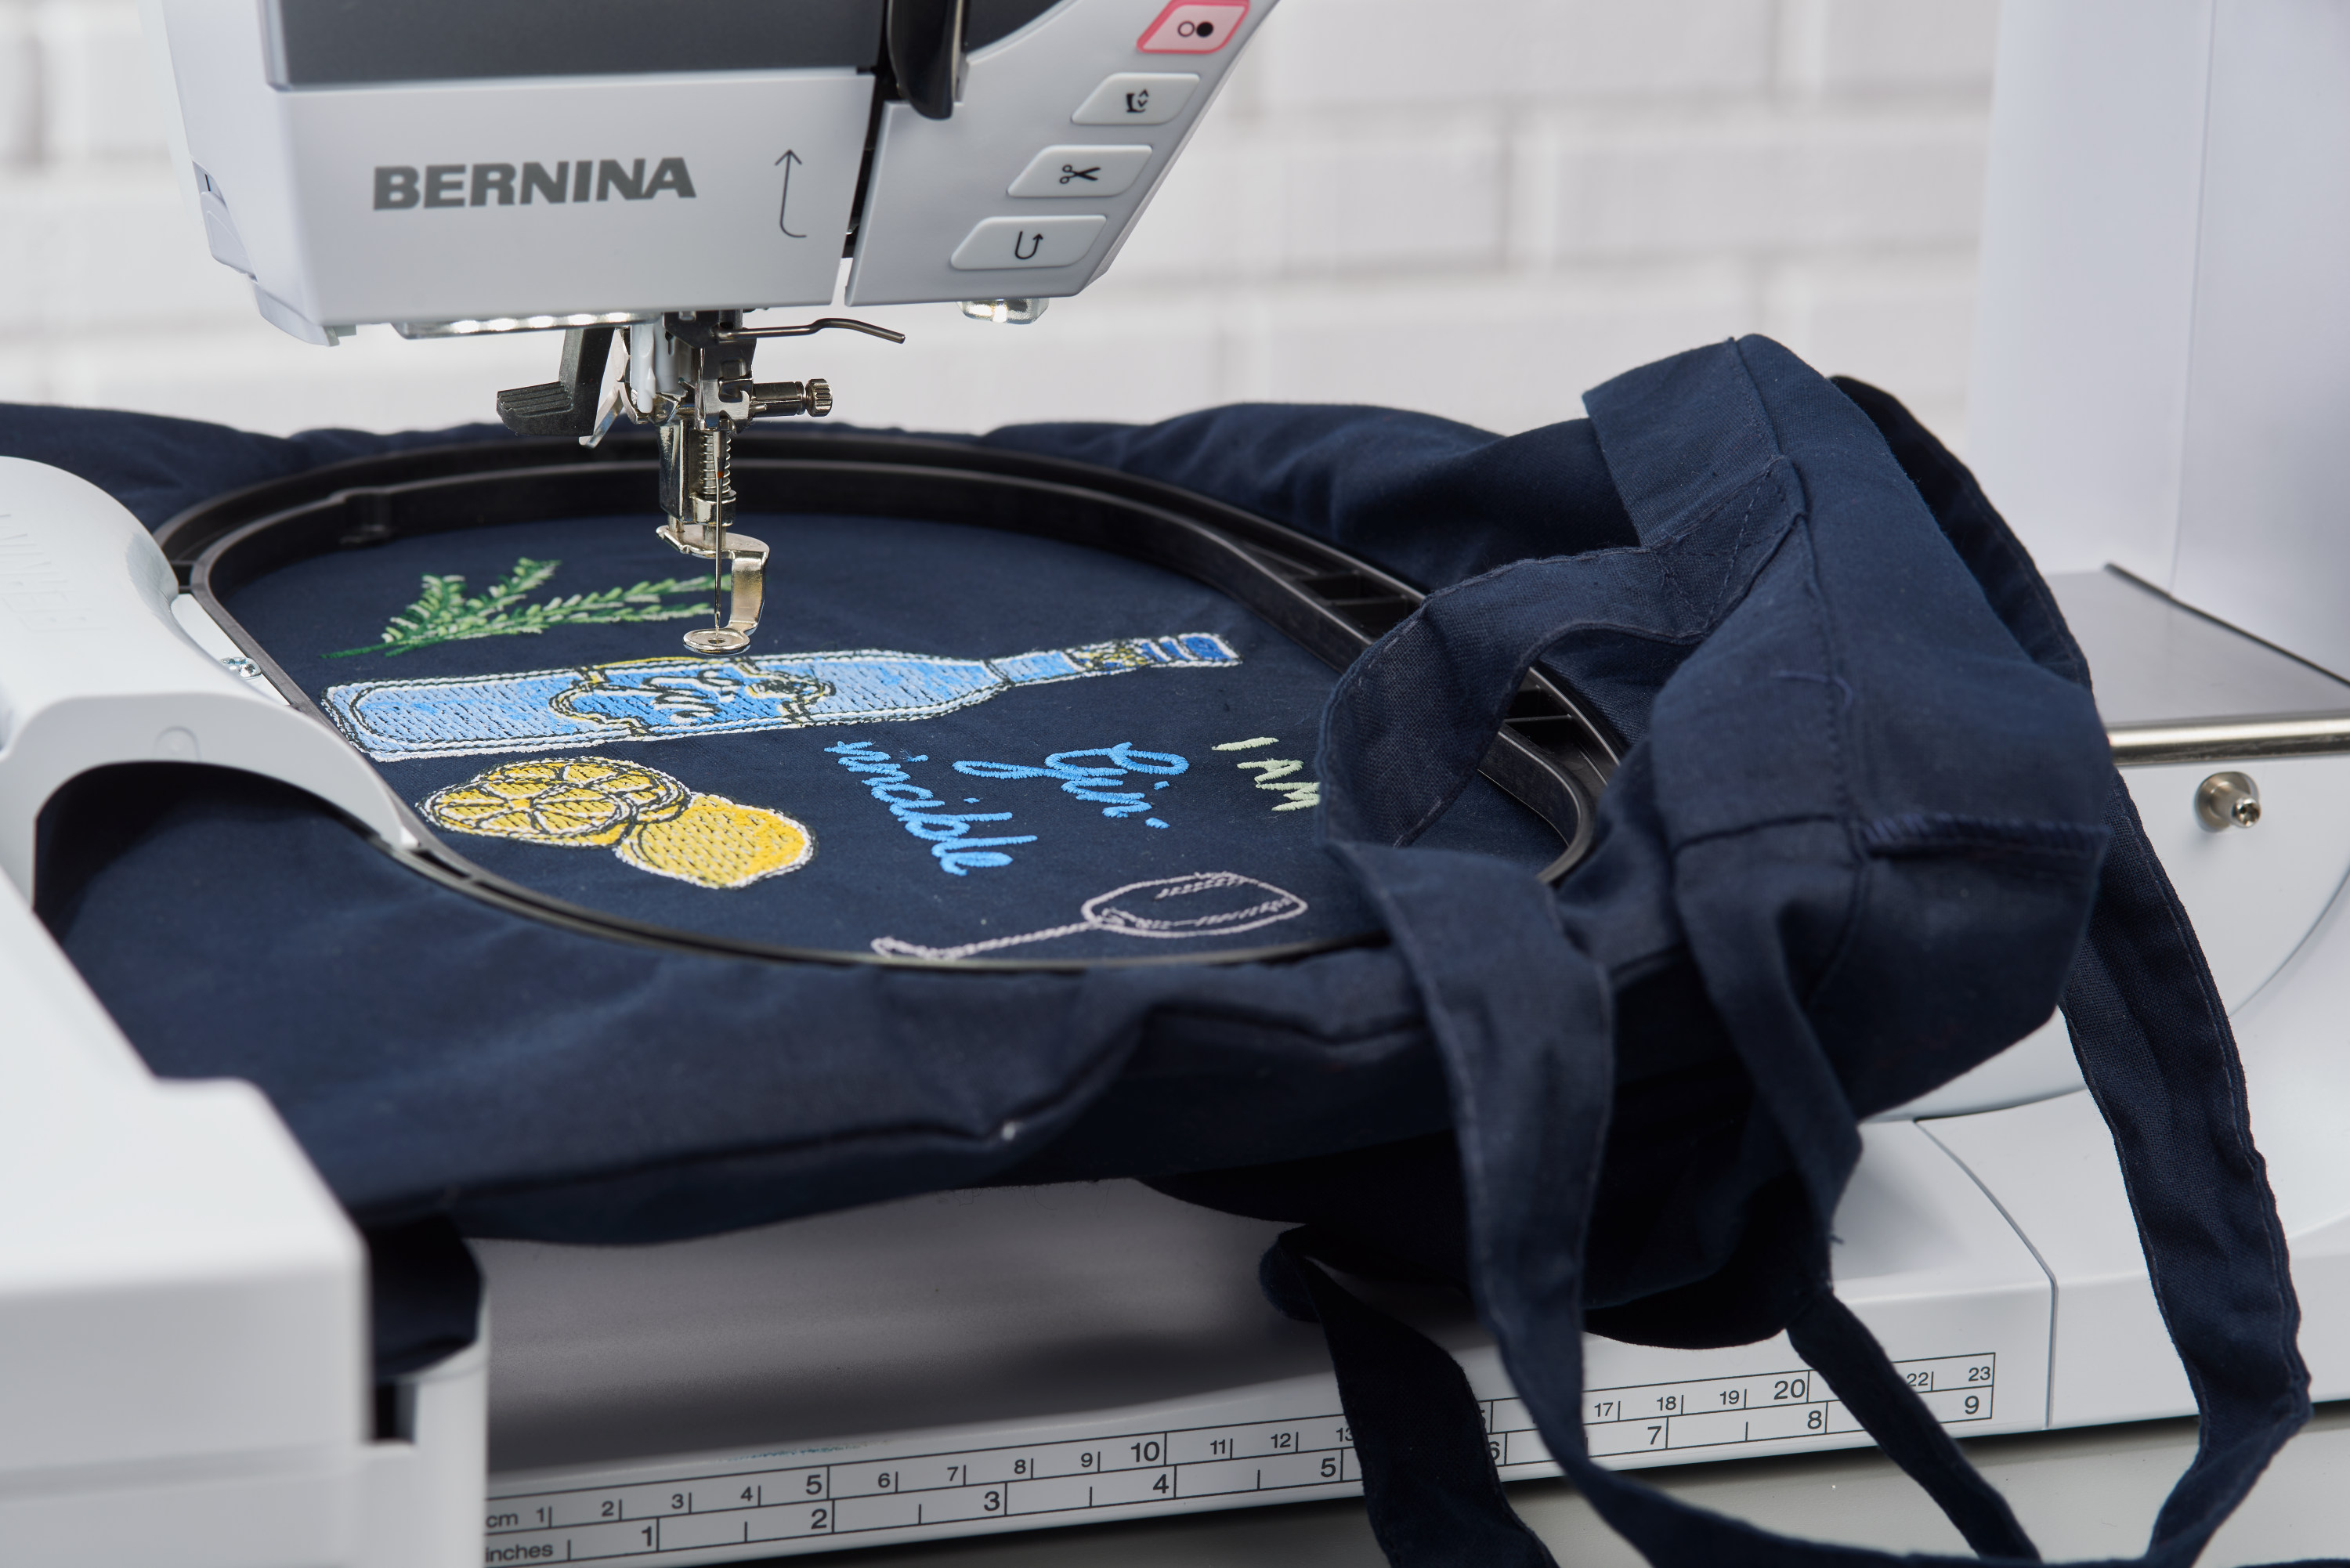 BERNINA 106681.70.00 Large Freearm Embroidery Hoop being used on a bag